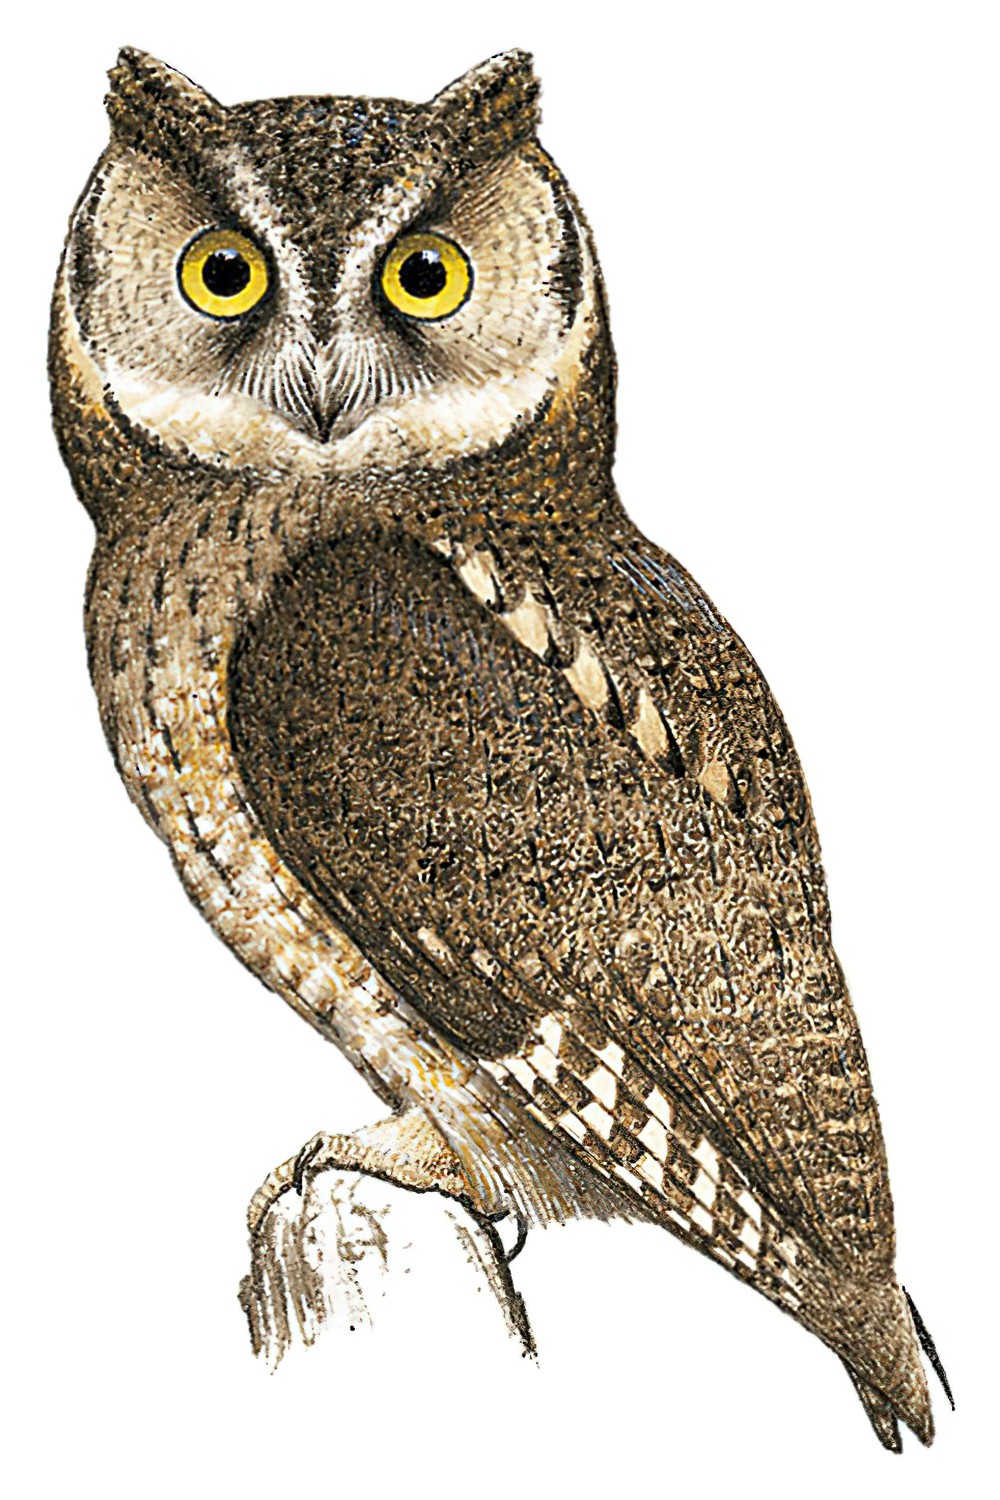 桑岛角鸮 / Sangihe Scops Owl / Otus collari